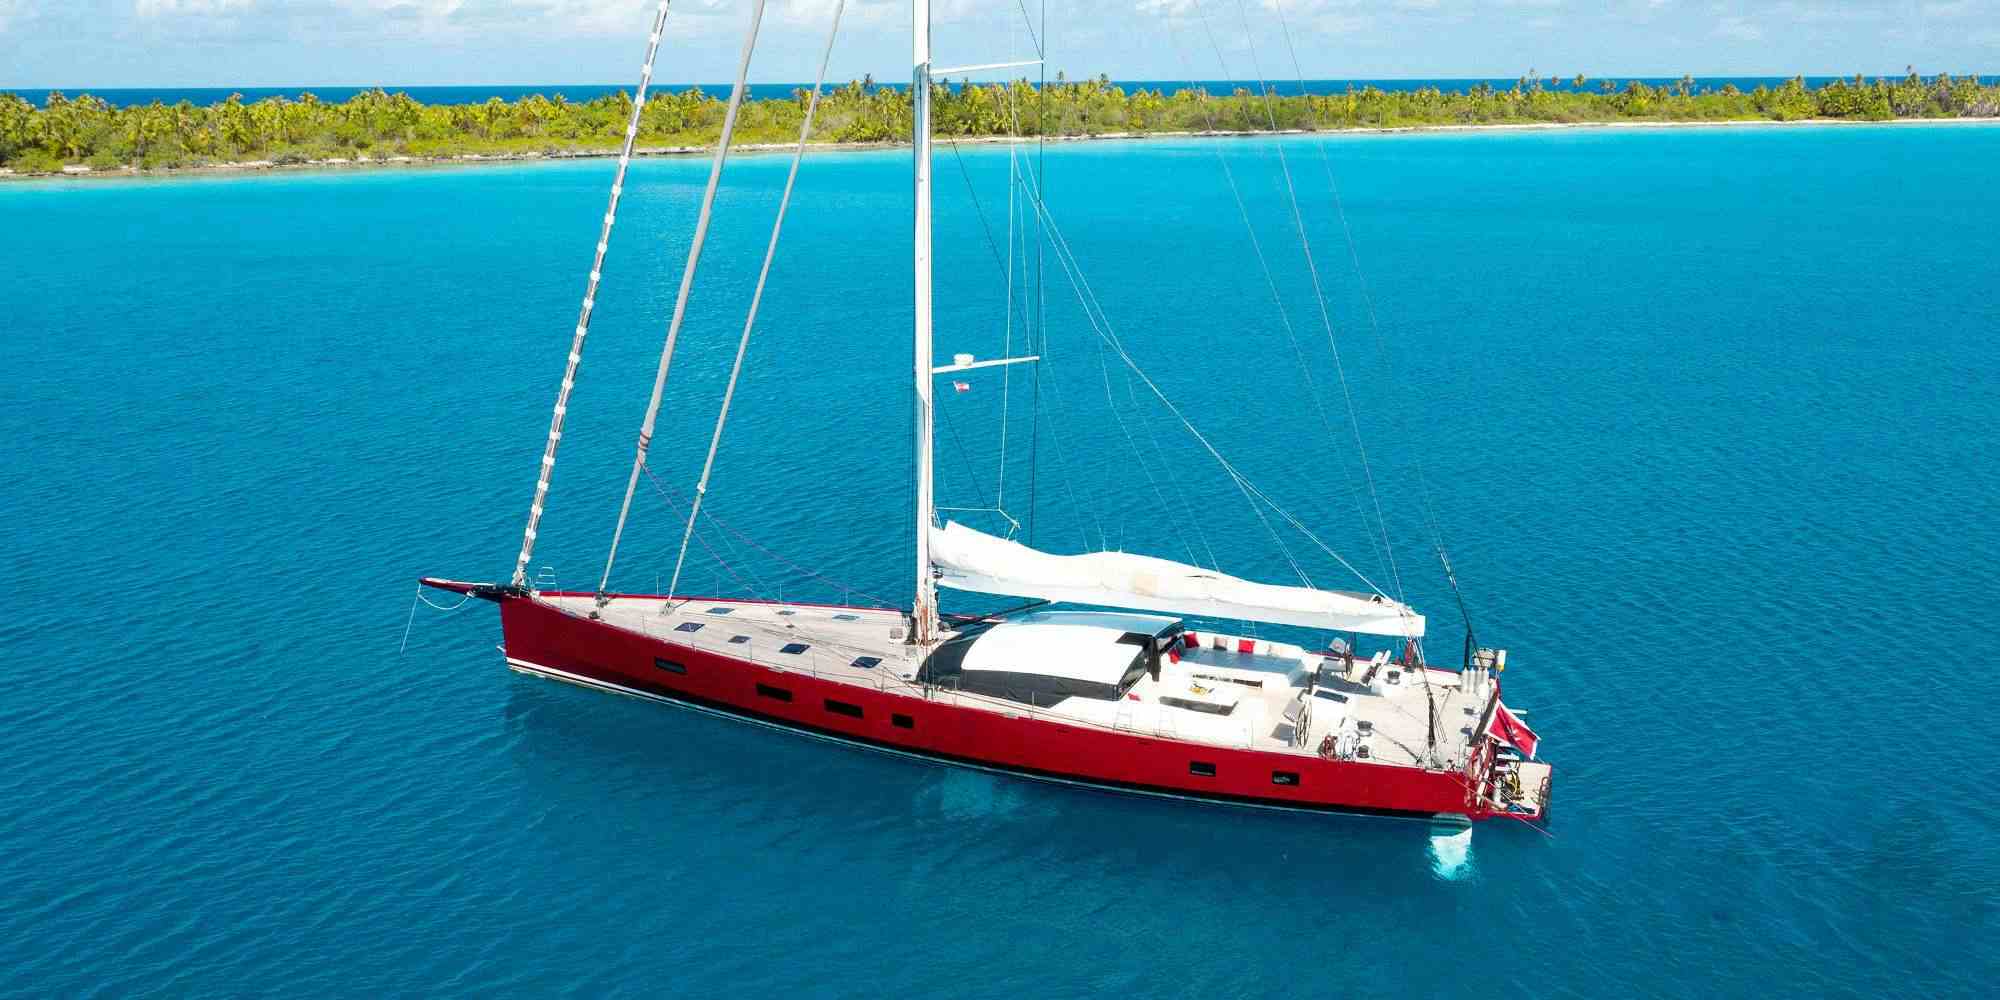 nomad iv - Sailboat Charter France & Boat hire in Fr. Riviera & Tyrrhenian Sea 1